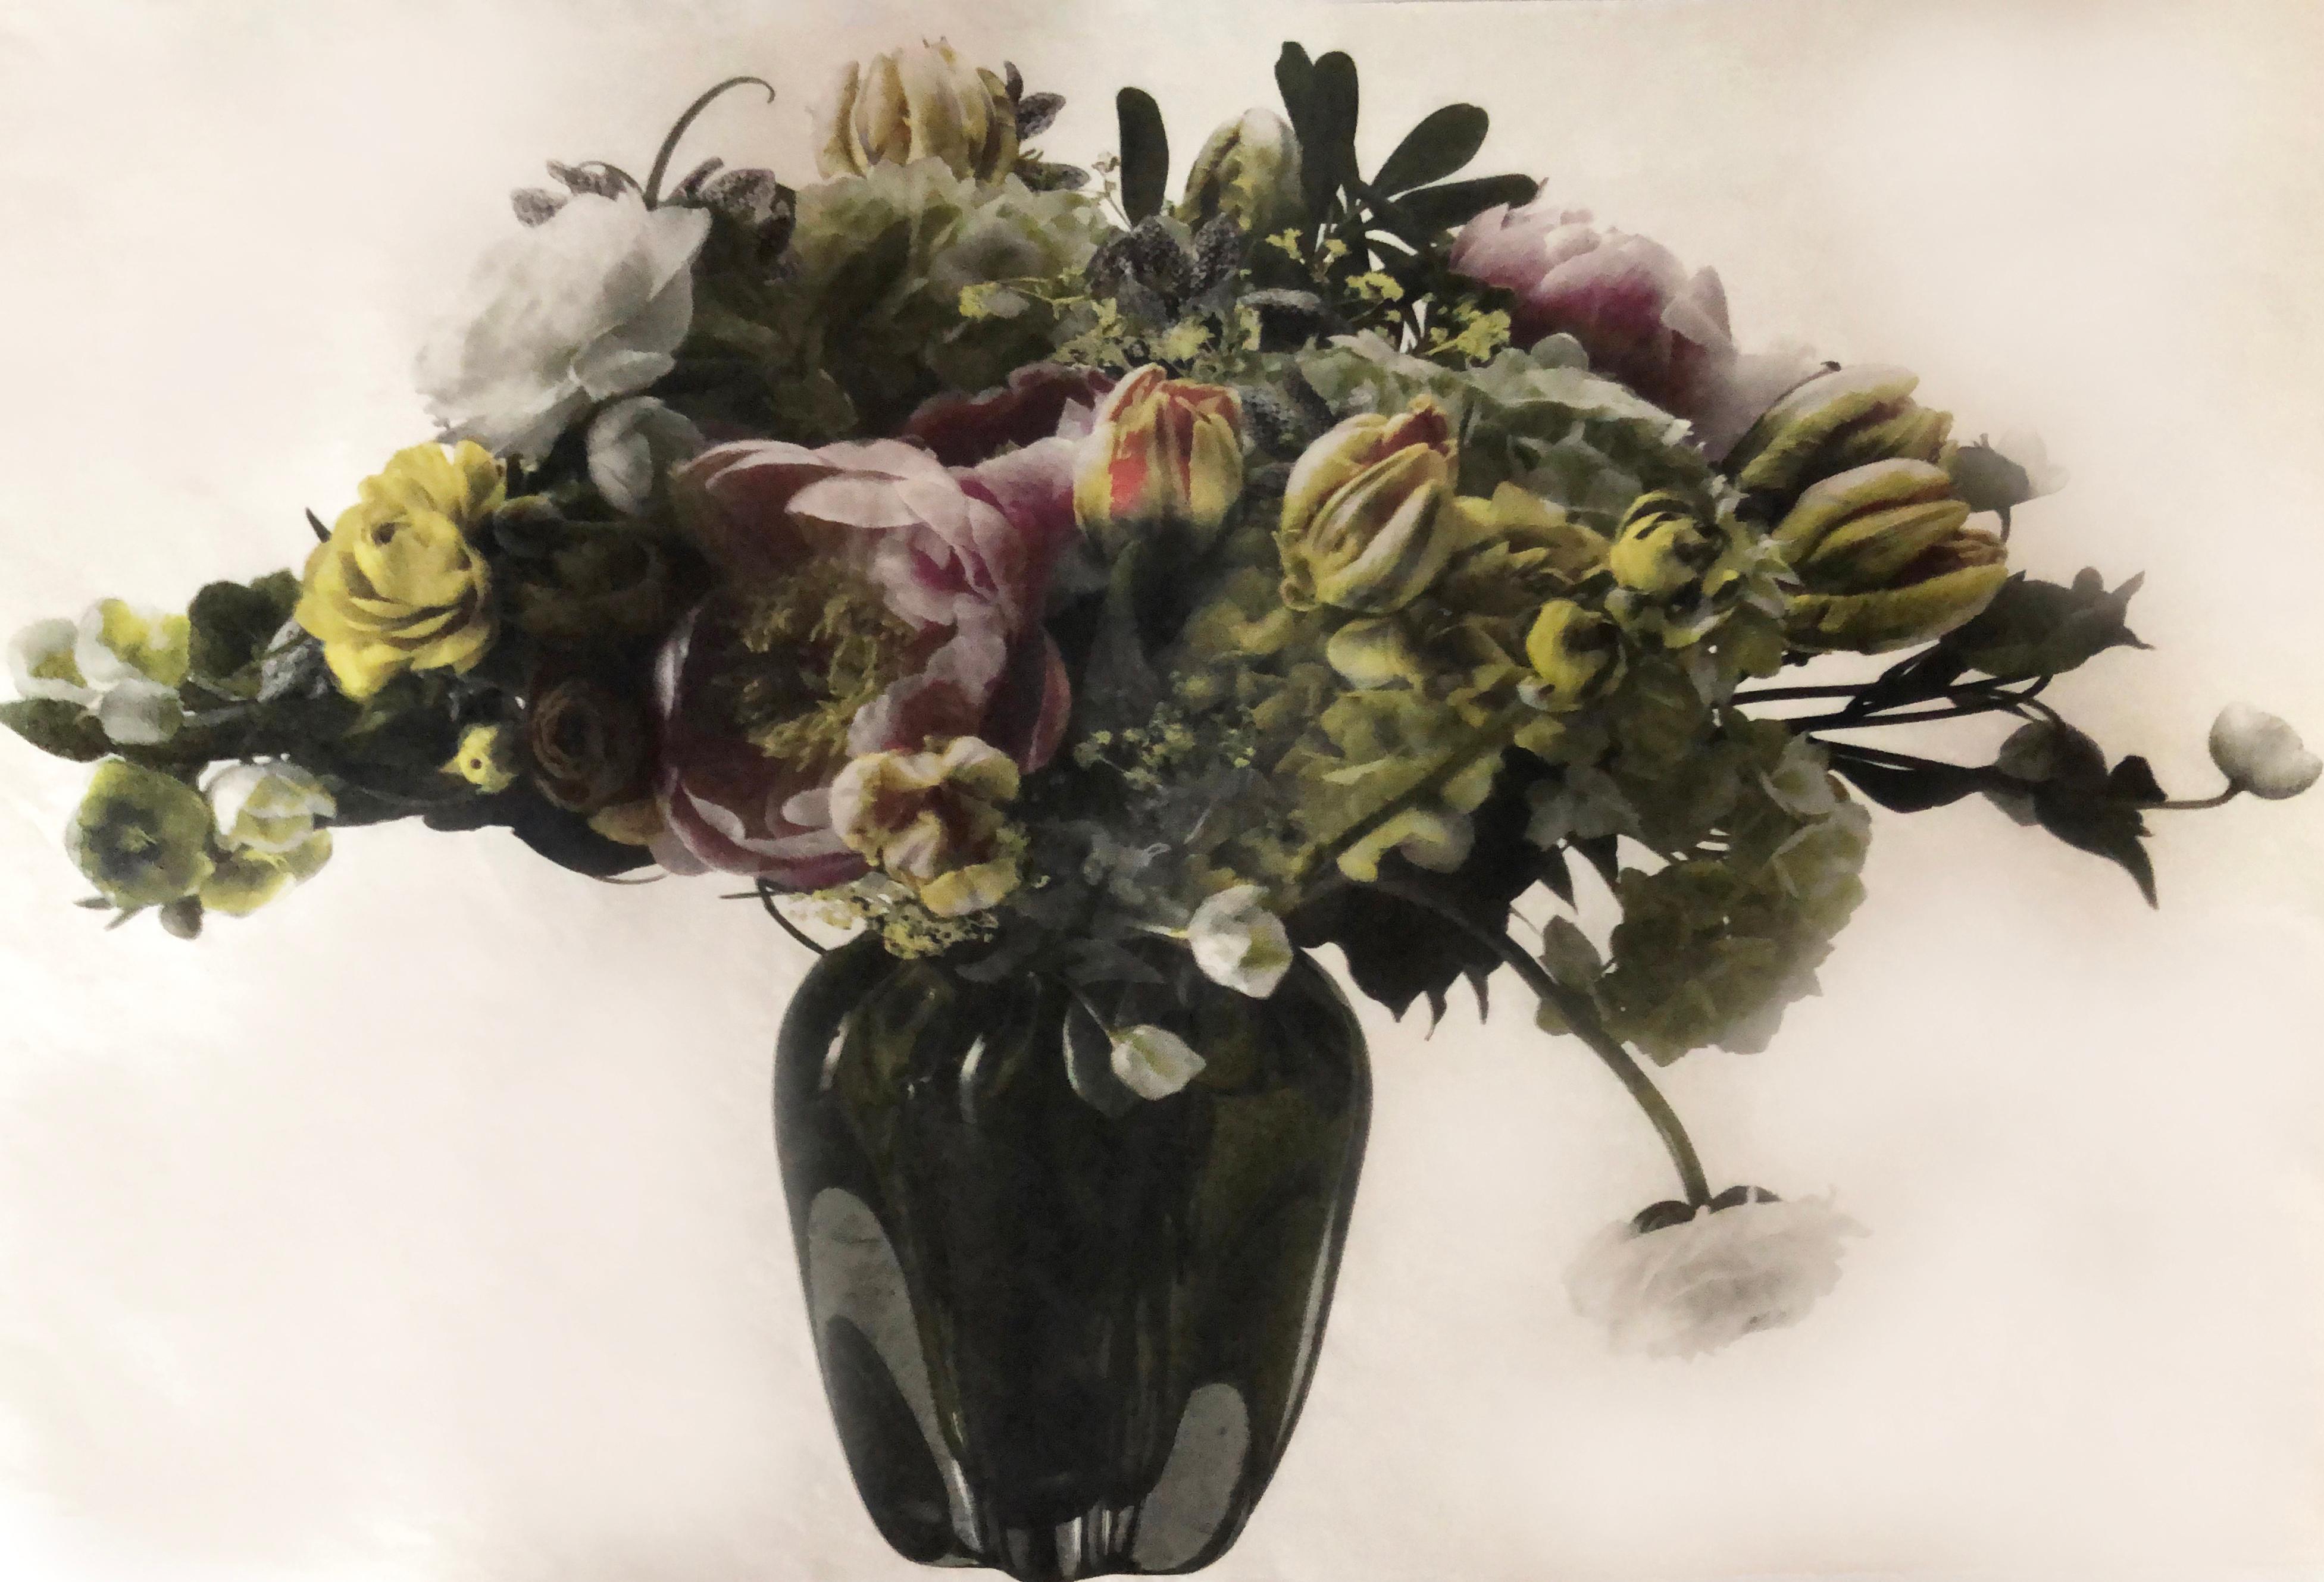 Jenn law Still-Life Print - Still, Flower Vase (Heirloom Series), unframed, hand photo lithography 